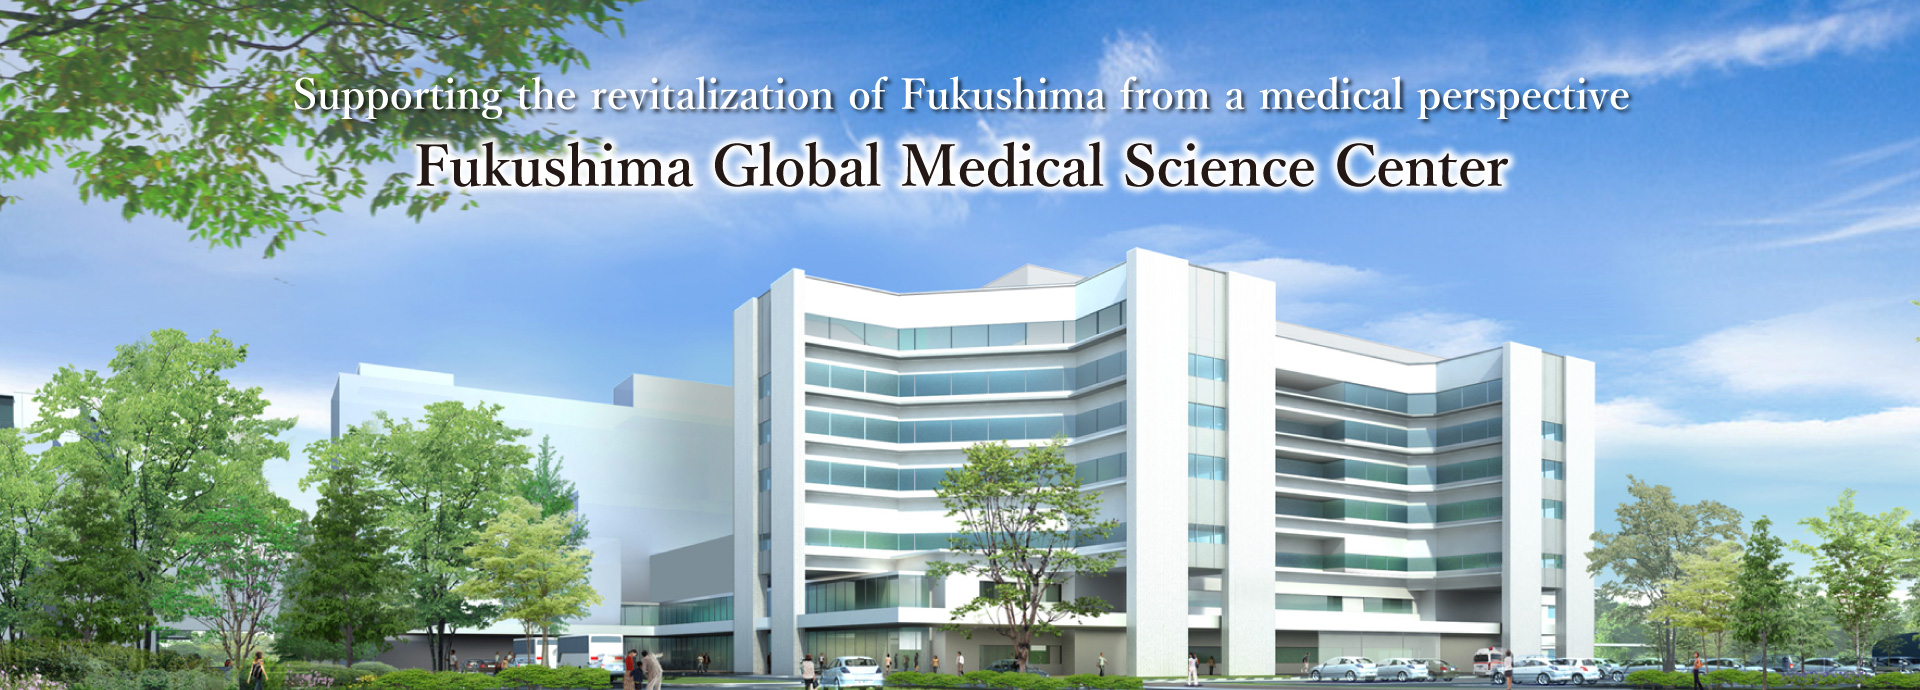 Supporting the revitalization of Fukushima from a medical perspective Fukushima Global Medical Science Center